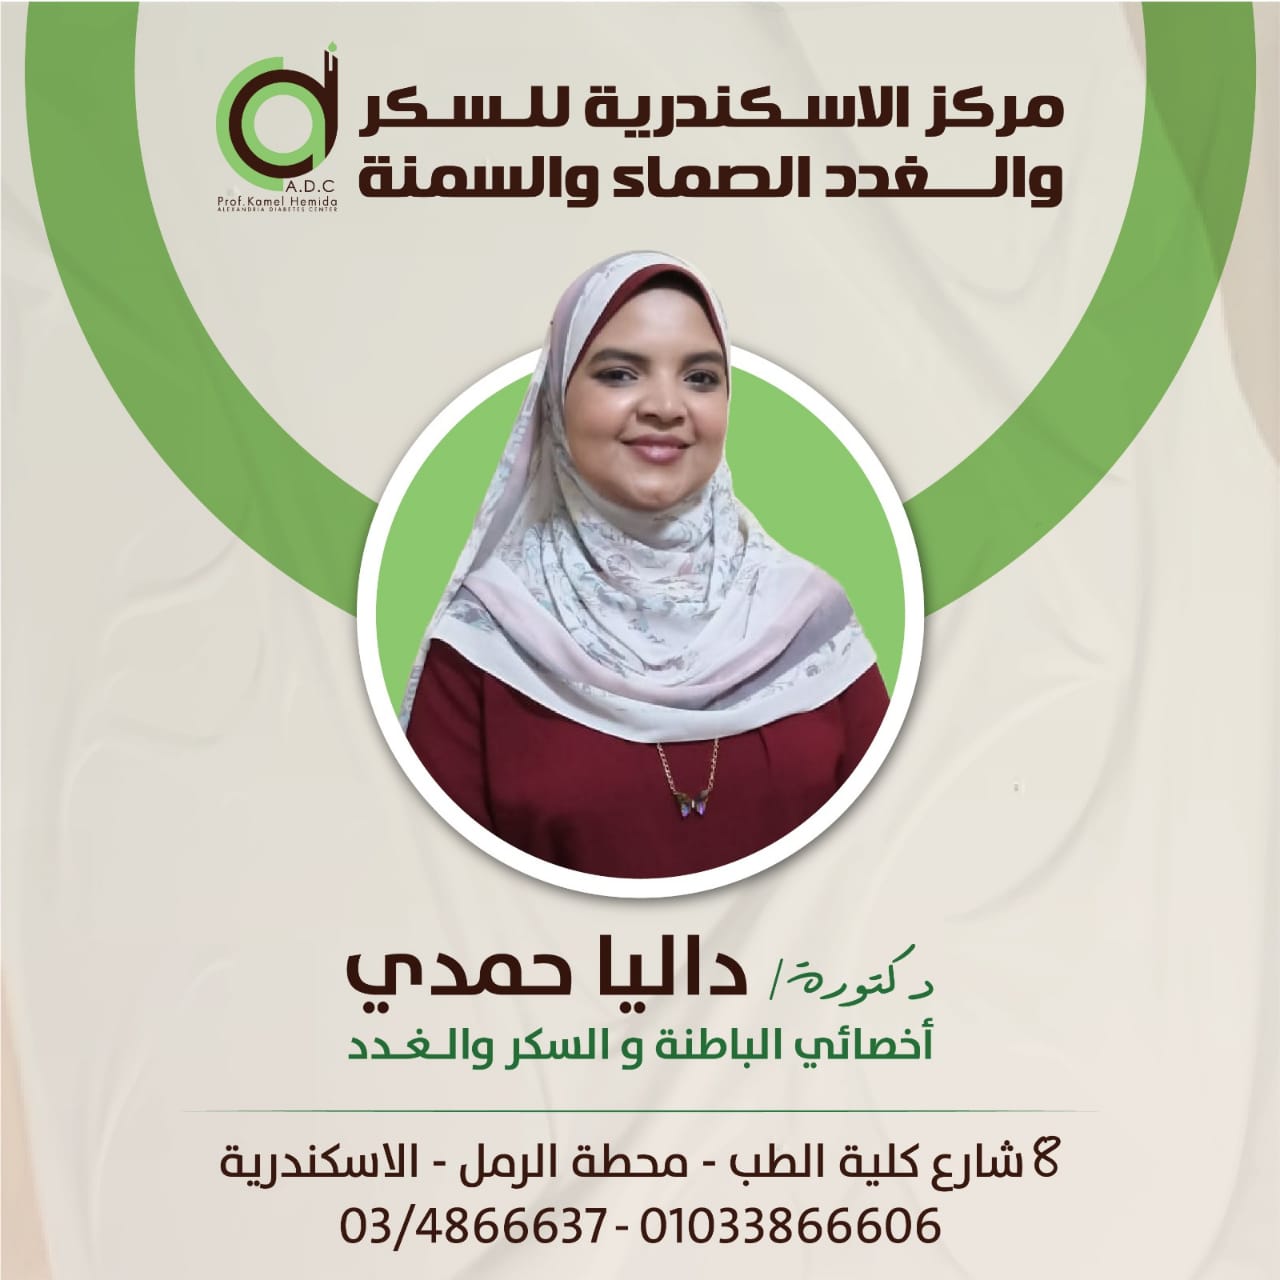 Dr. Dalia Hamdy